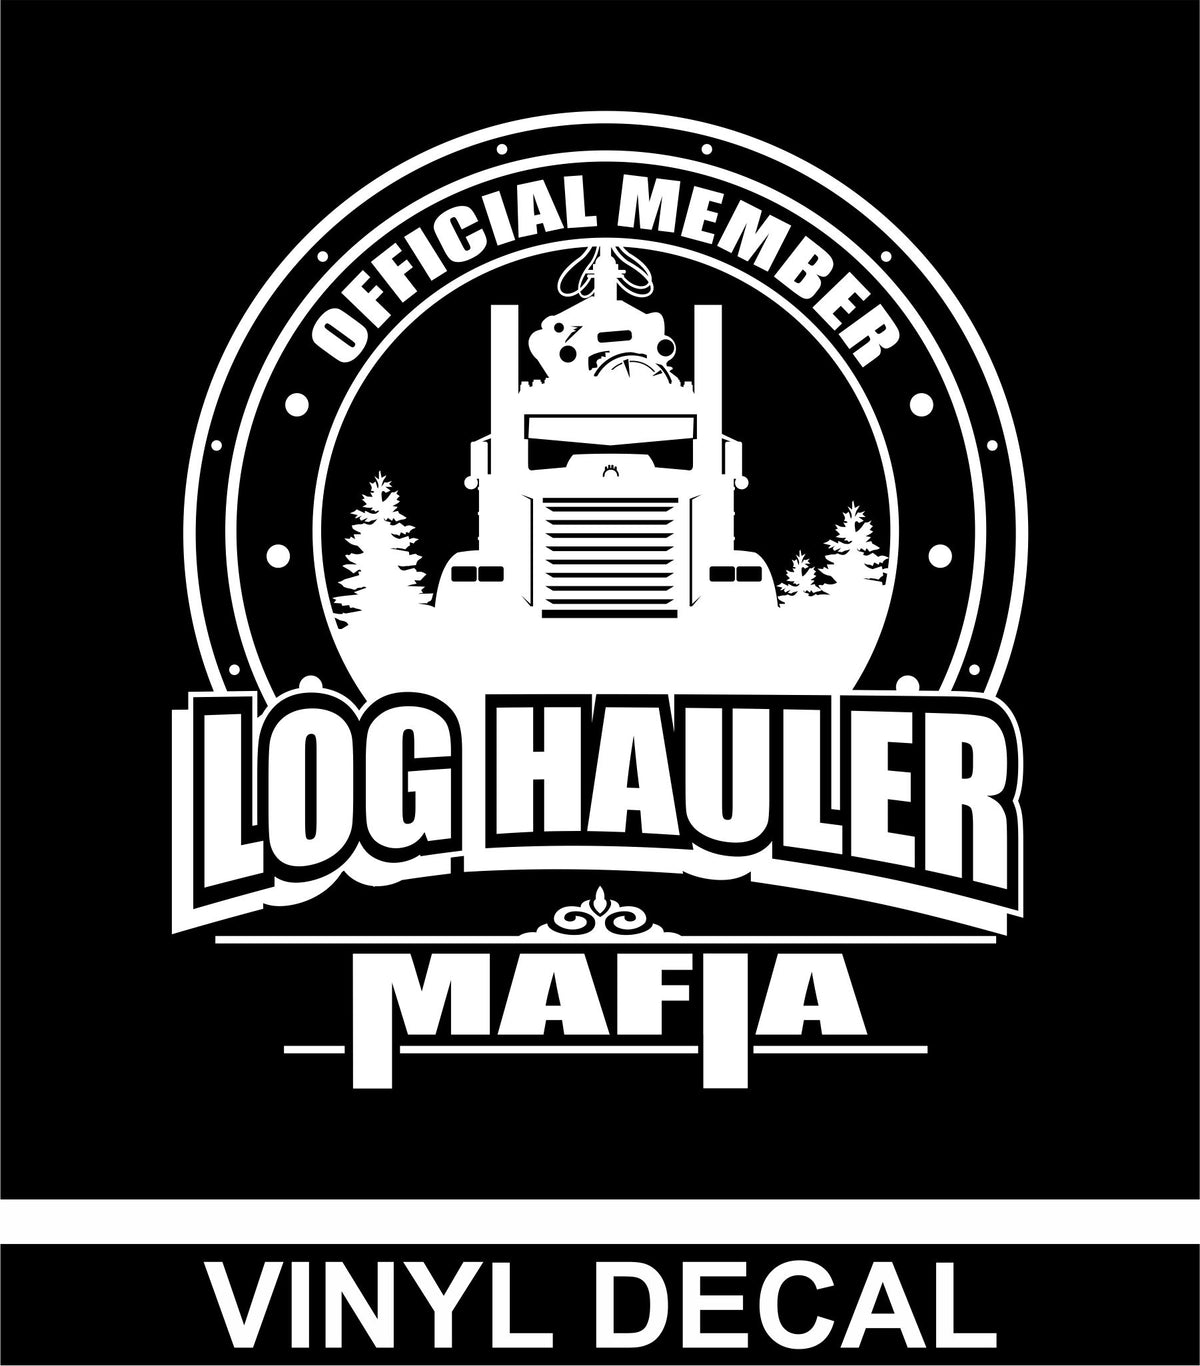 Log Hauler Mafia KW Vinyl Decal Free Shipping